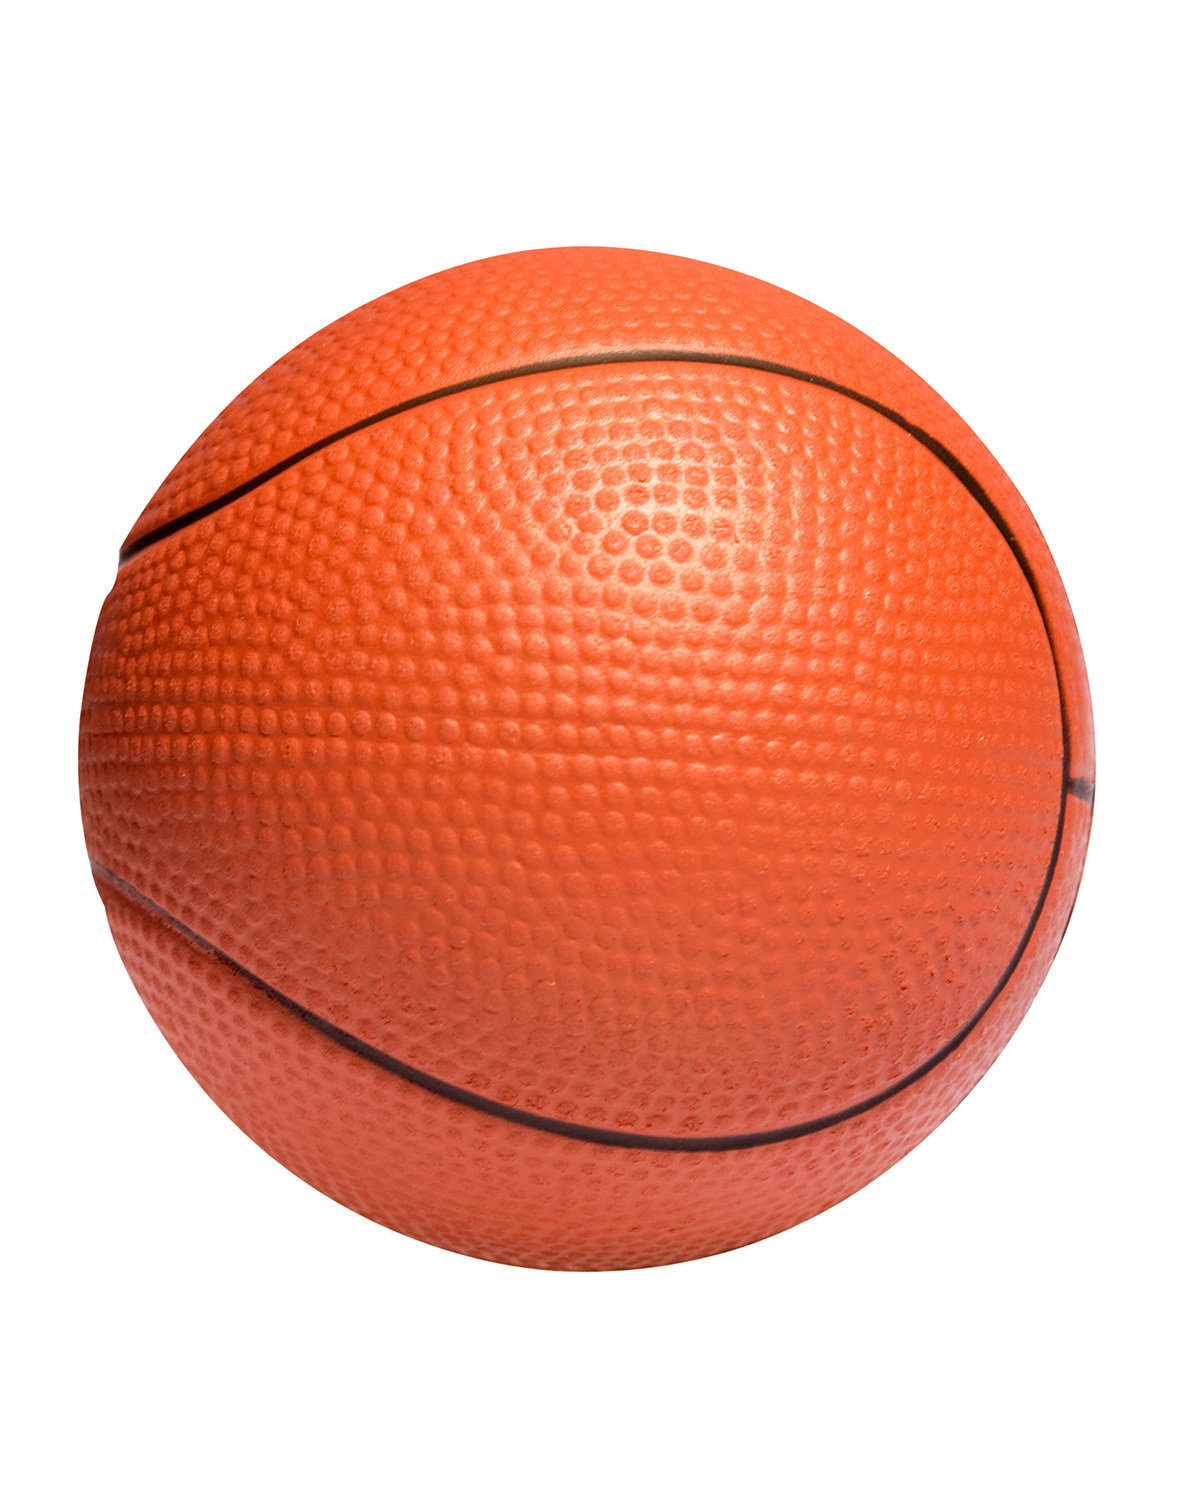 Prime Line Basketball Stress Reliever orange 